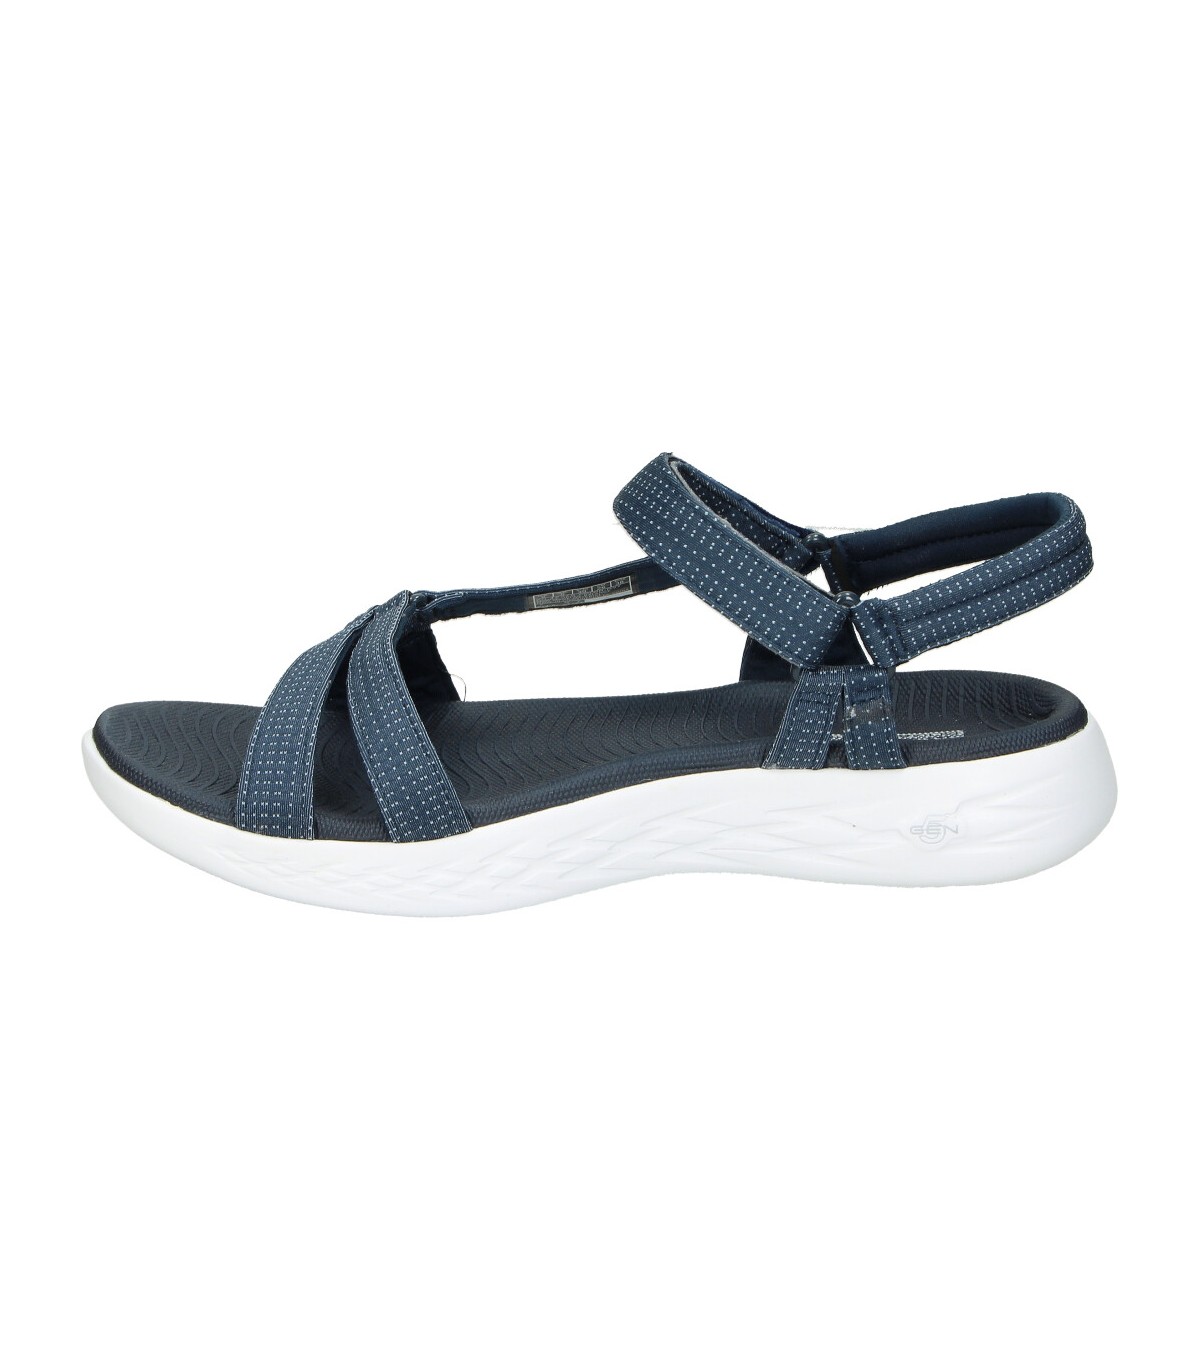 Sandalias cómodo de 15316-nvy color azul